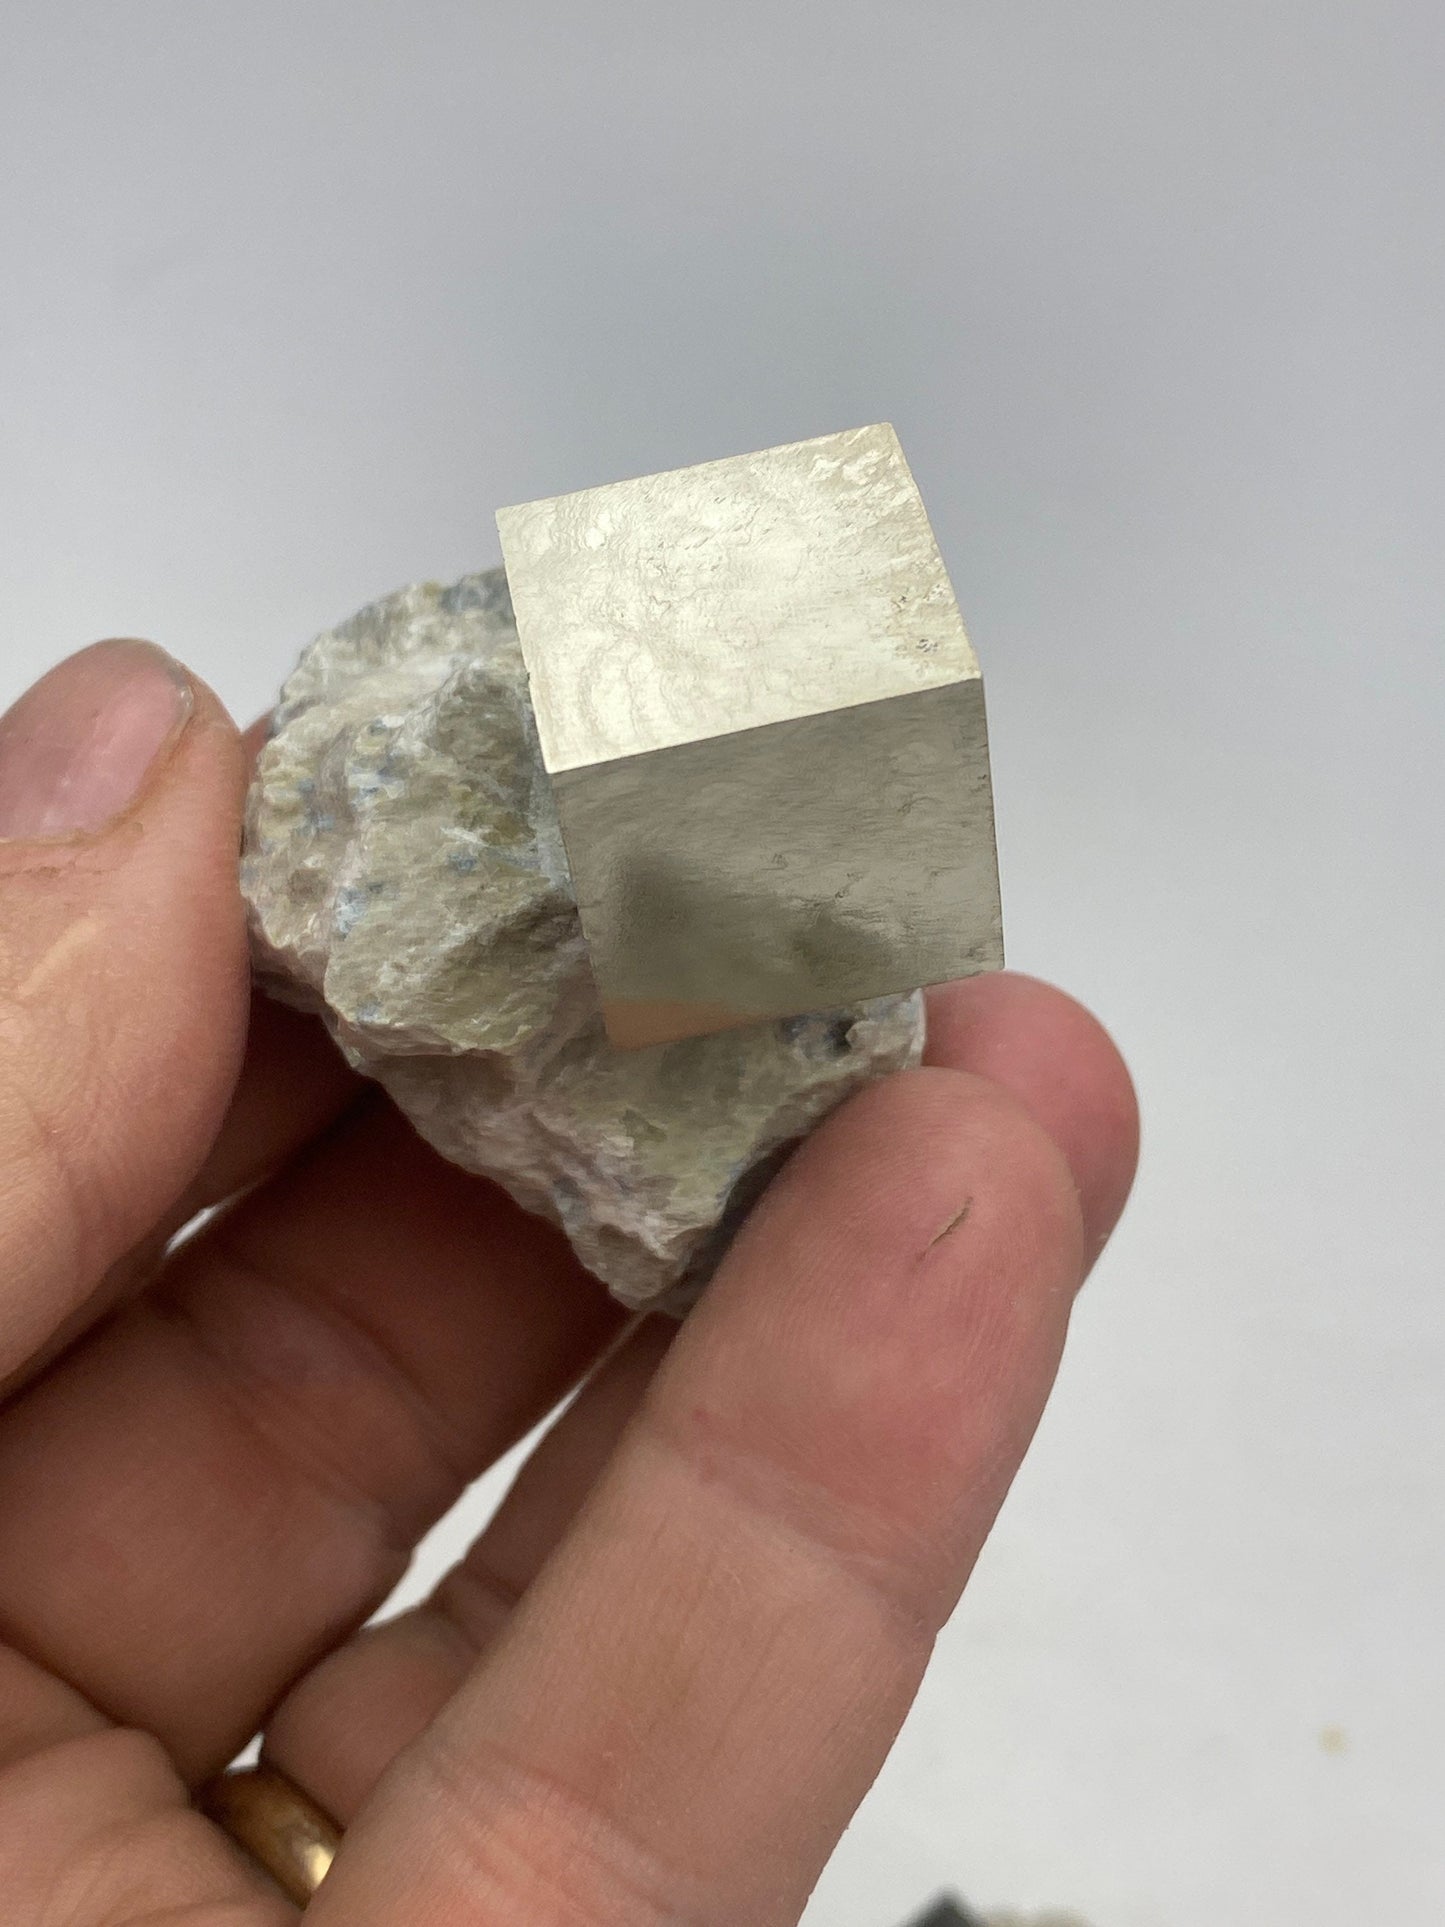 Medium Pyrite cube crystals from Navajun Spain